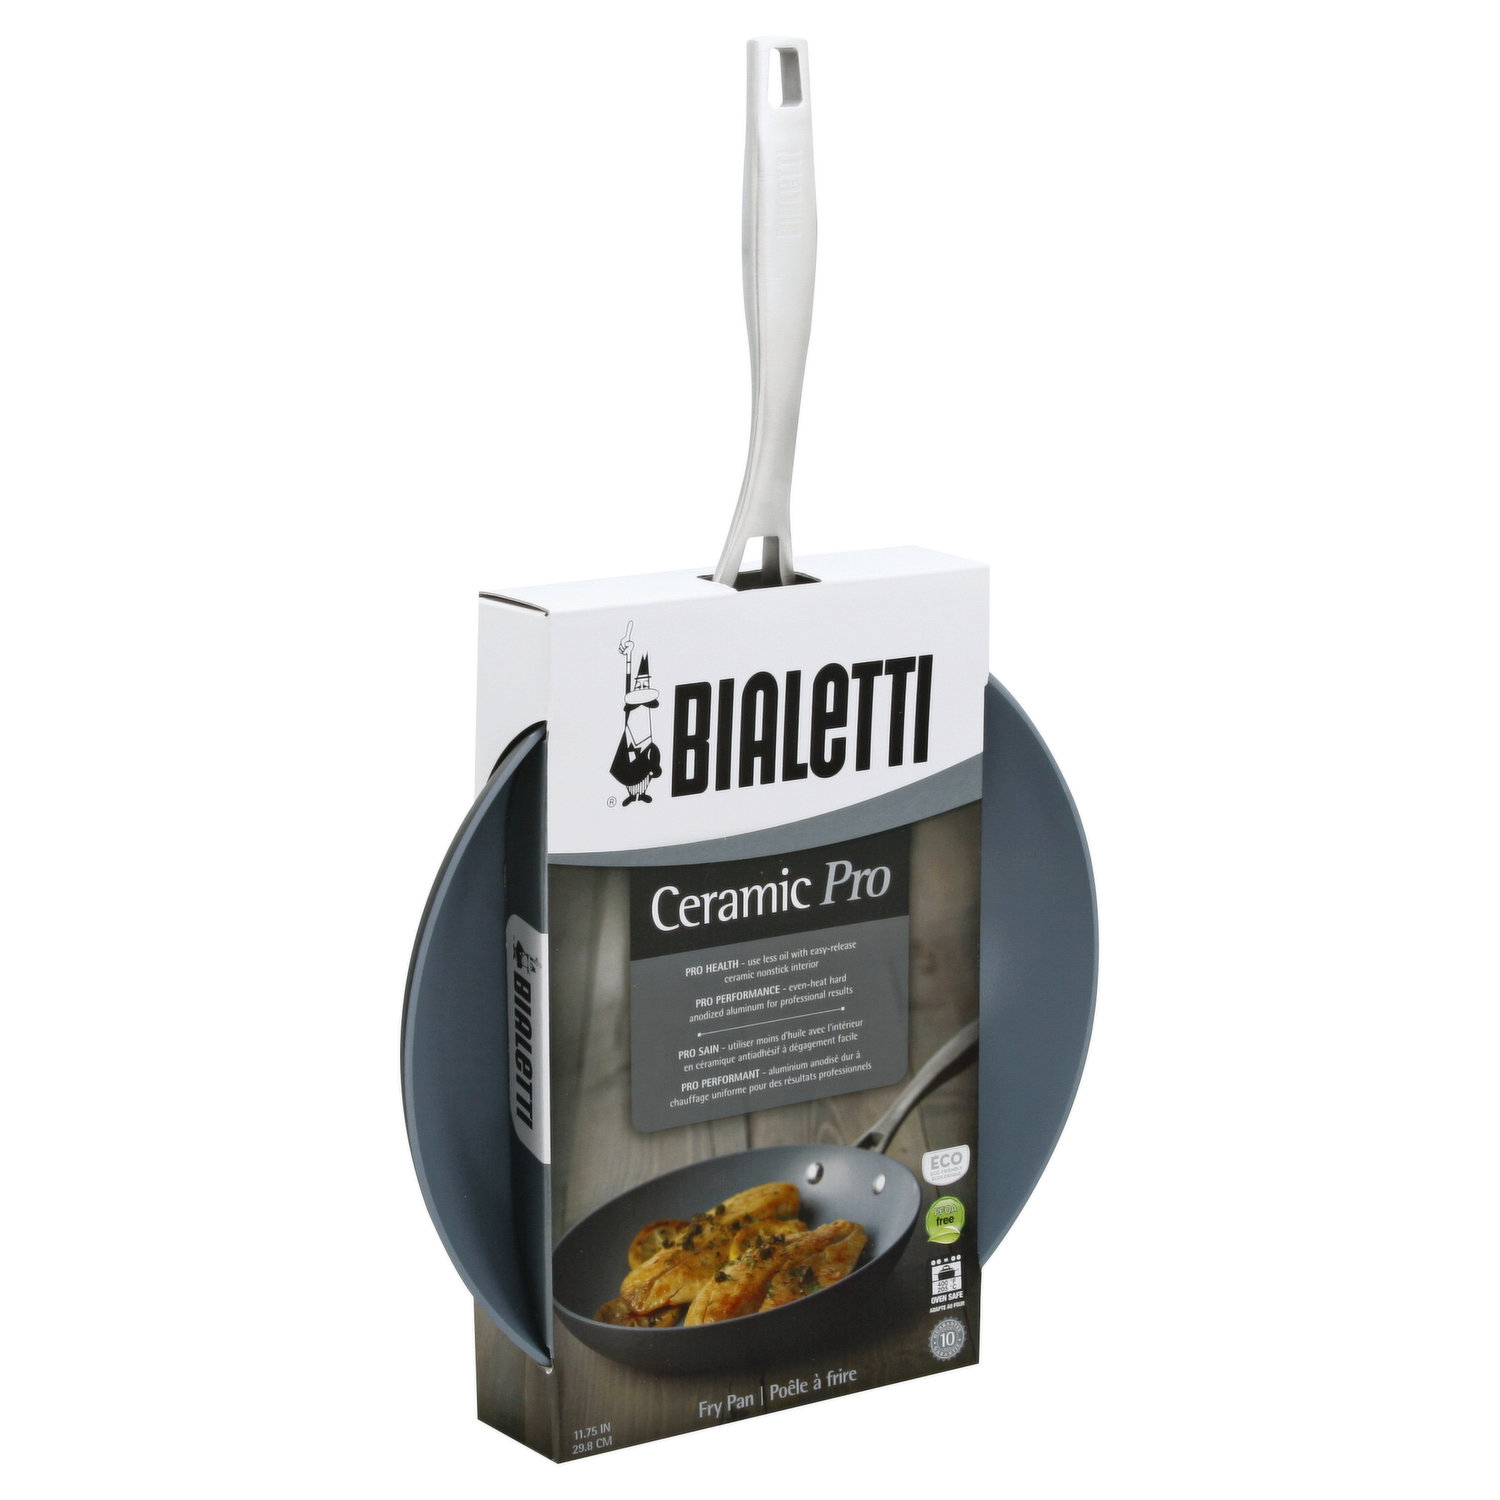 Bialetti Ceramic Pro Cookware Set Review: Nice, Nonstick Design